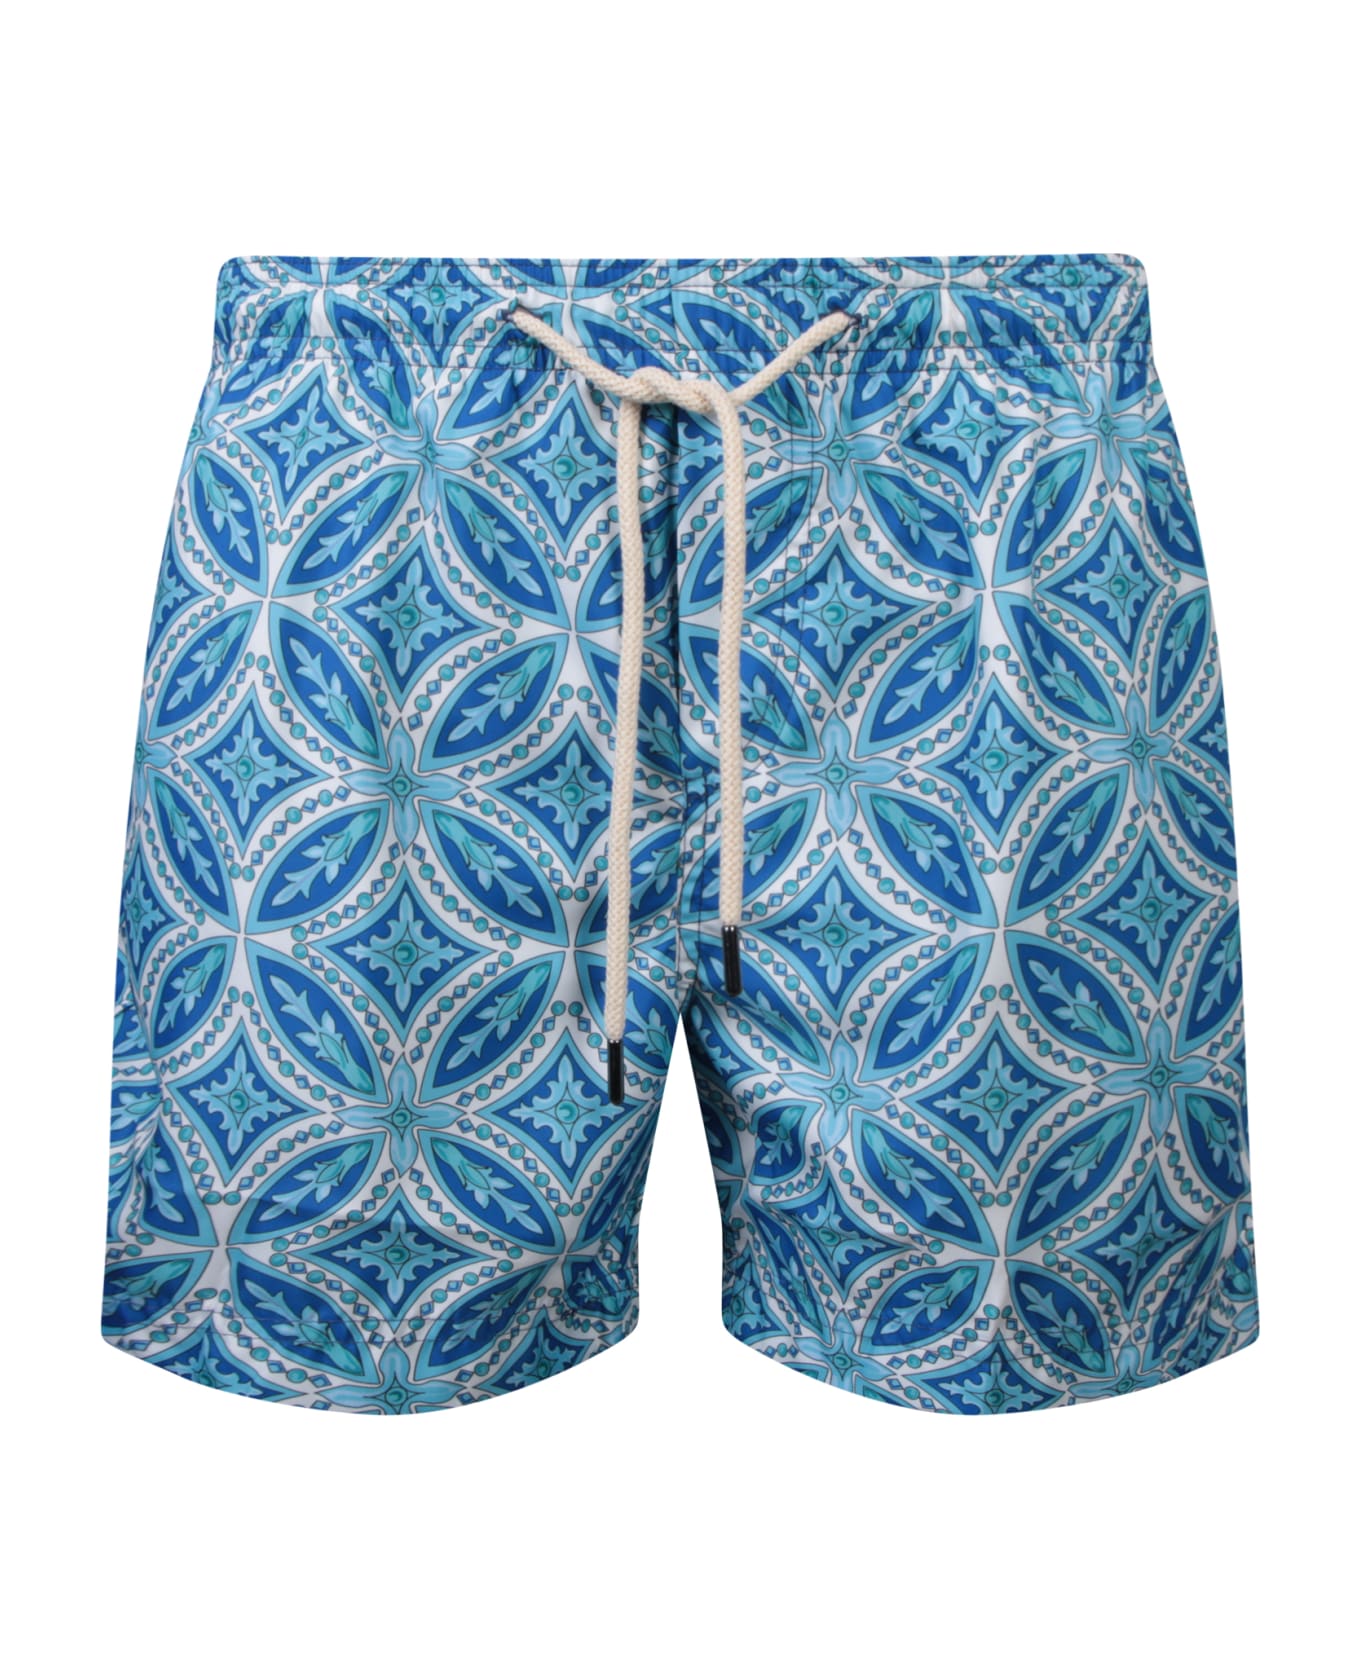 Peninsula Swimwear Patterned Swim Shorts In Sky Blue/blue/white By Peninsula - White